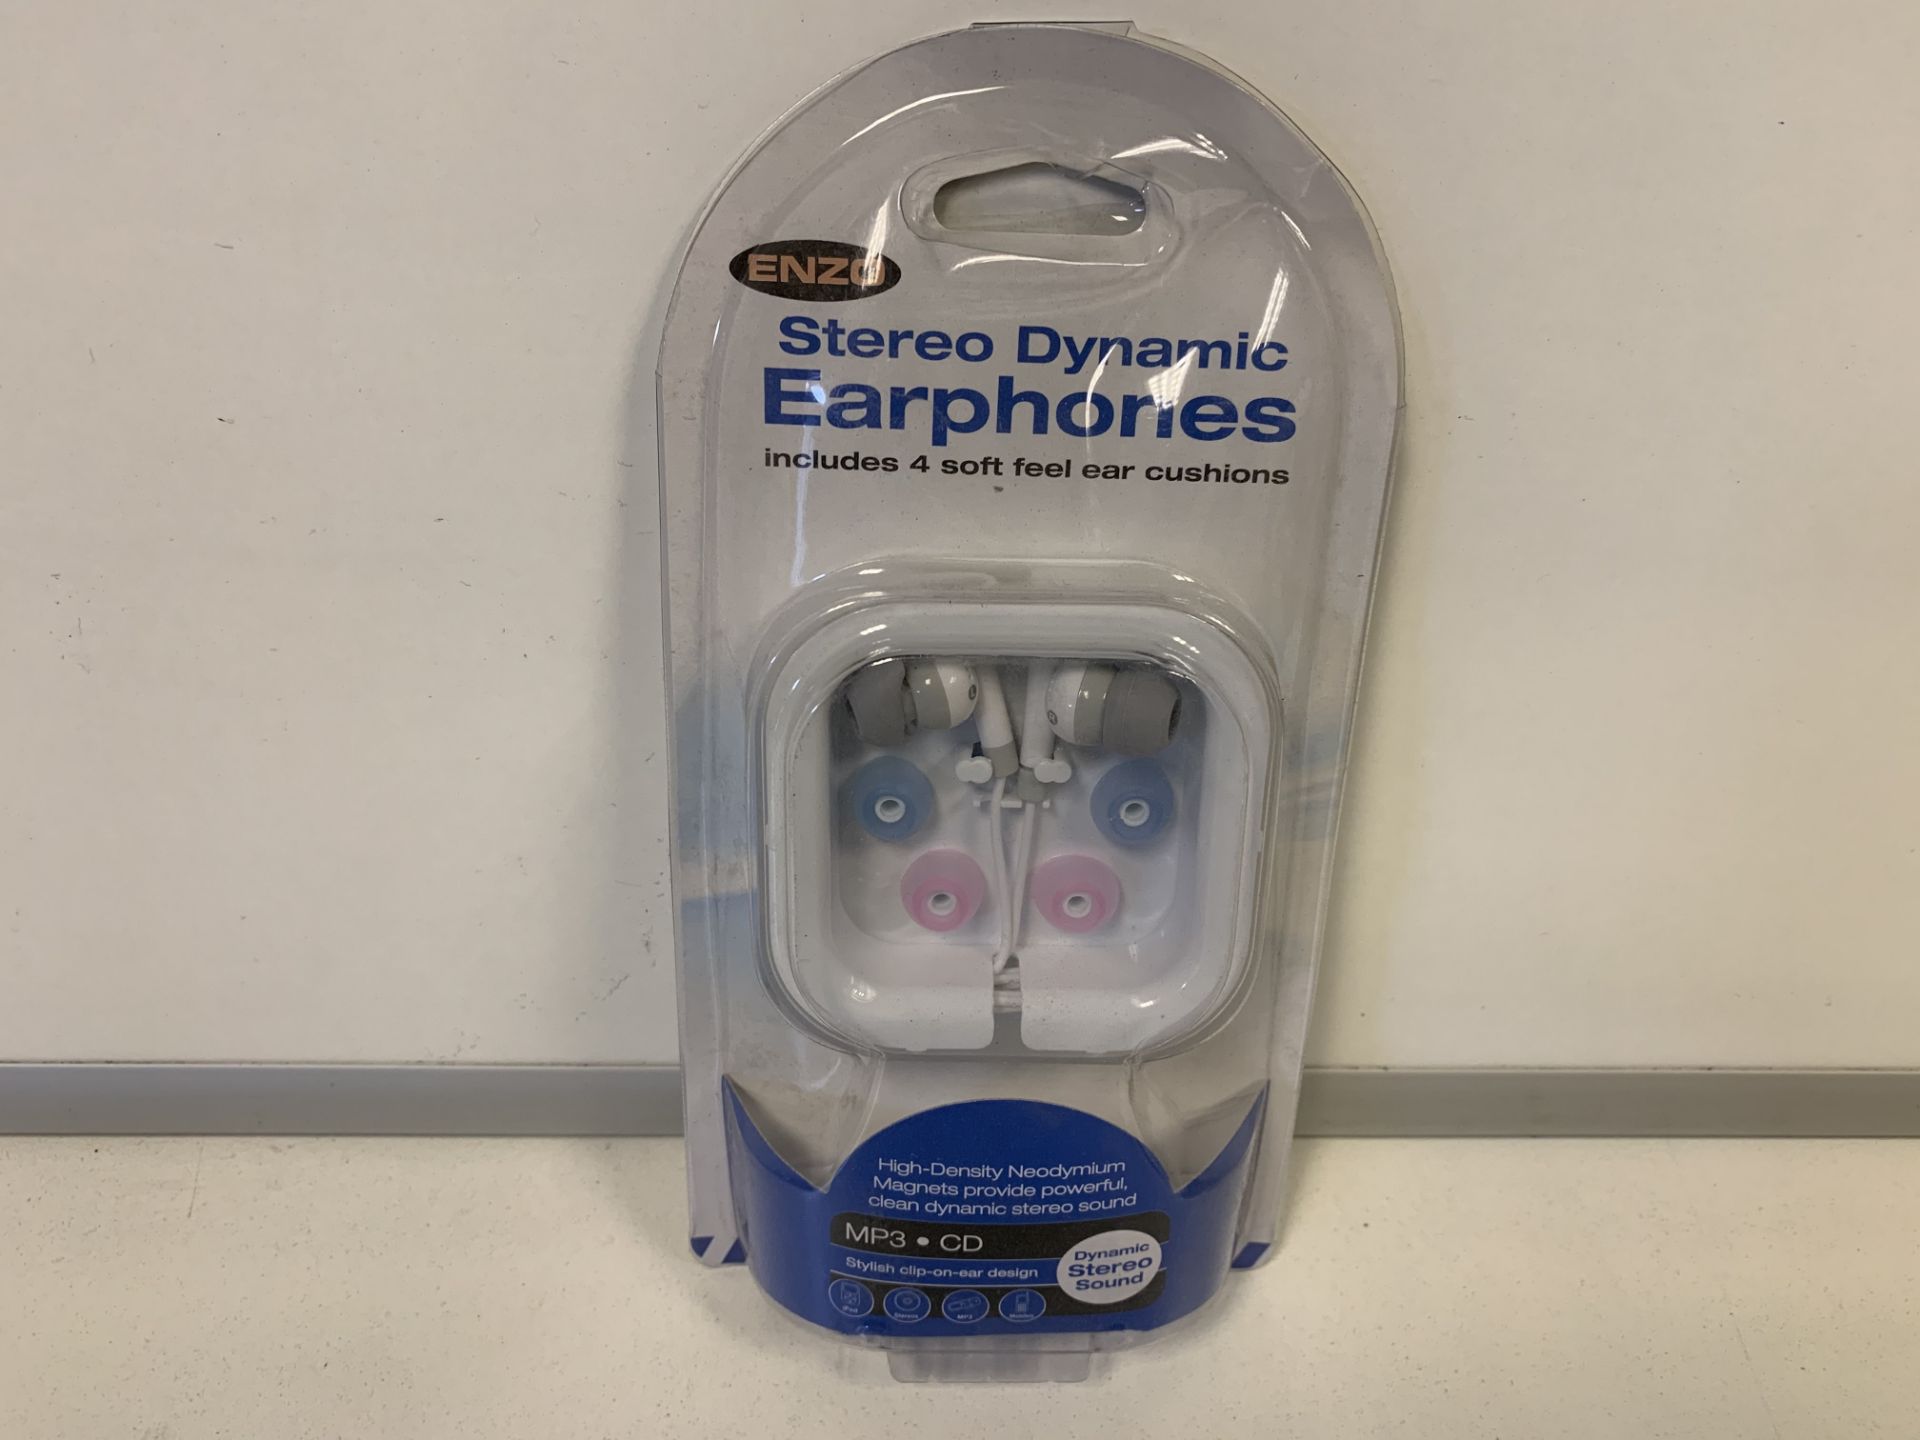 60 X BRAND NEW ENZO STEREO DYNAMIC EARPHONES INCLUDING 4 SOFT FEEL EAR CUSHIONS